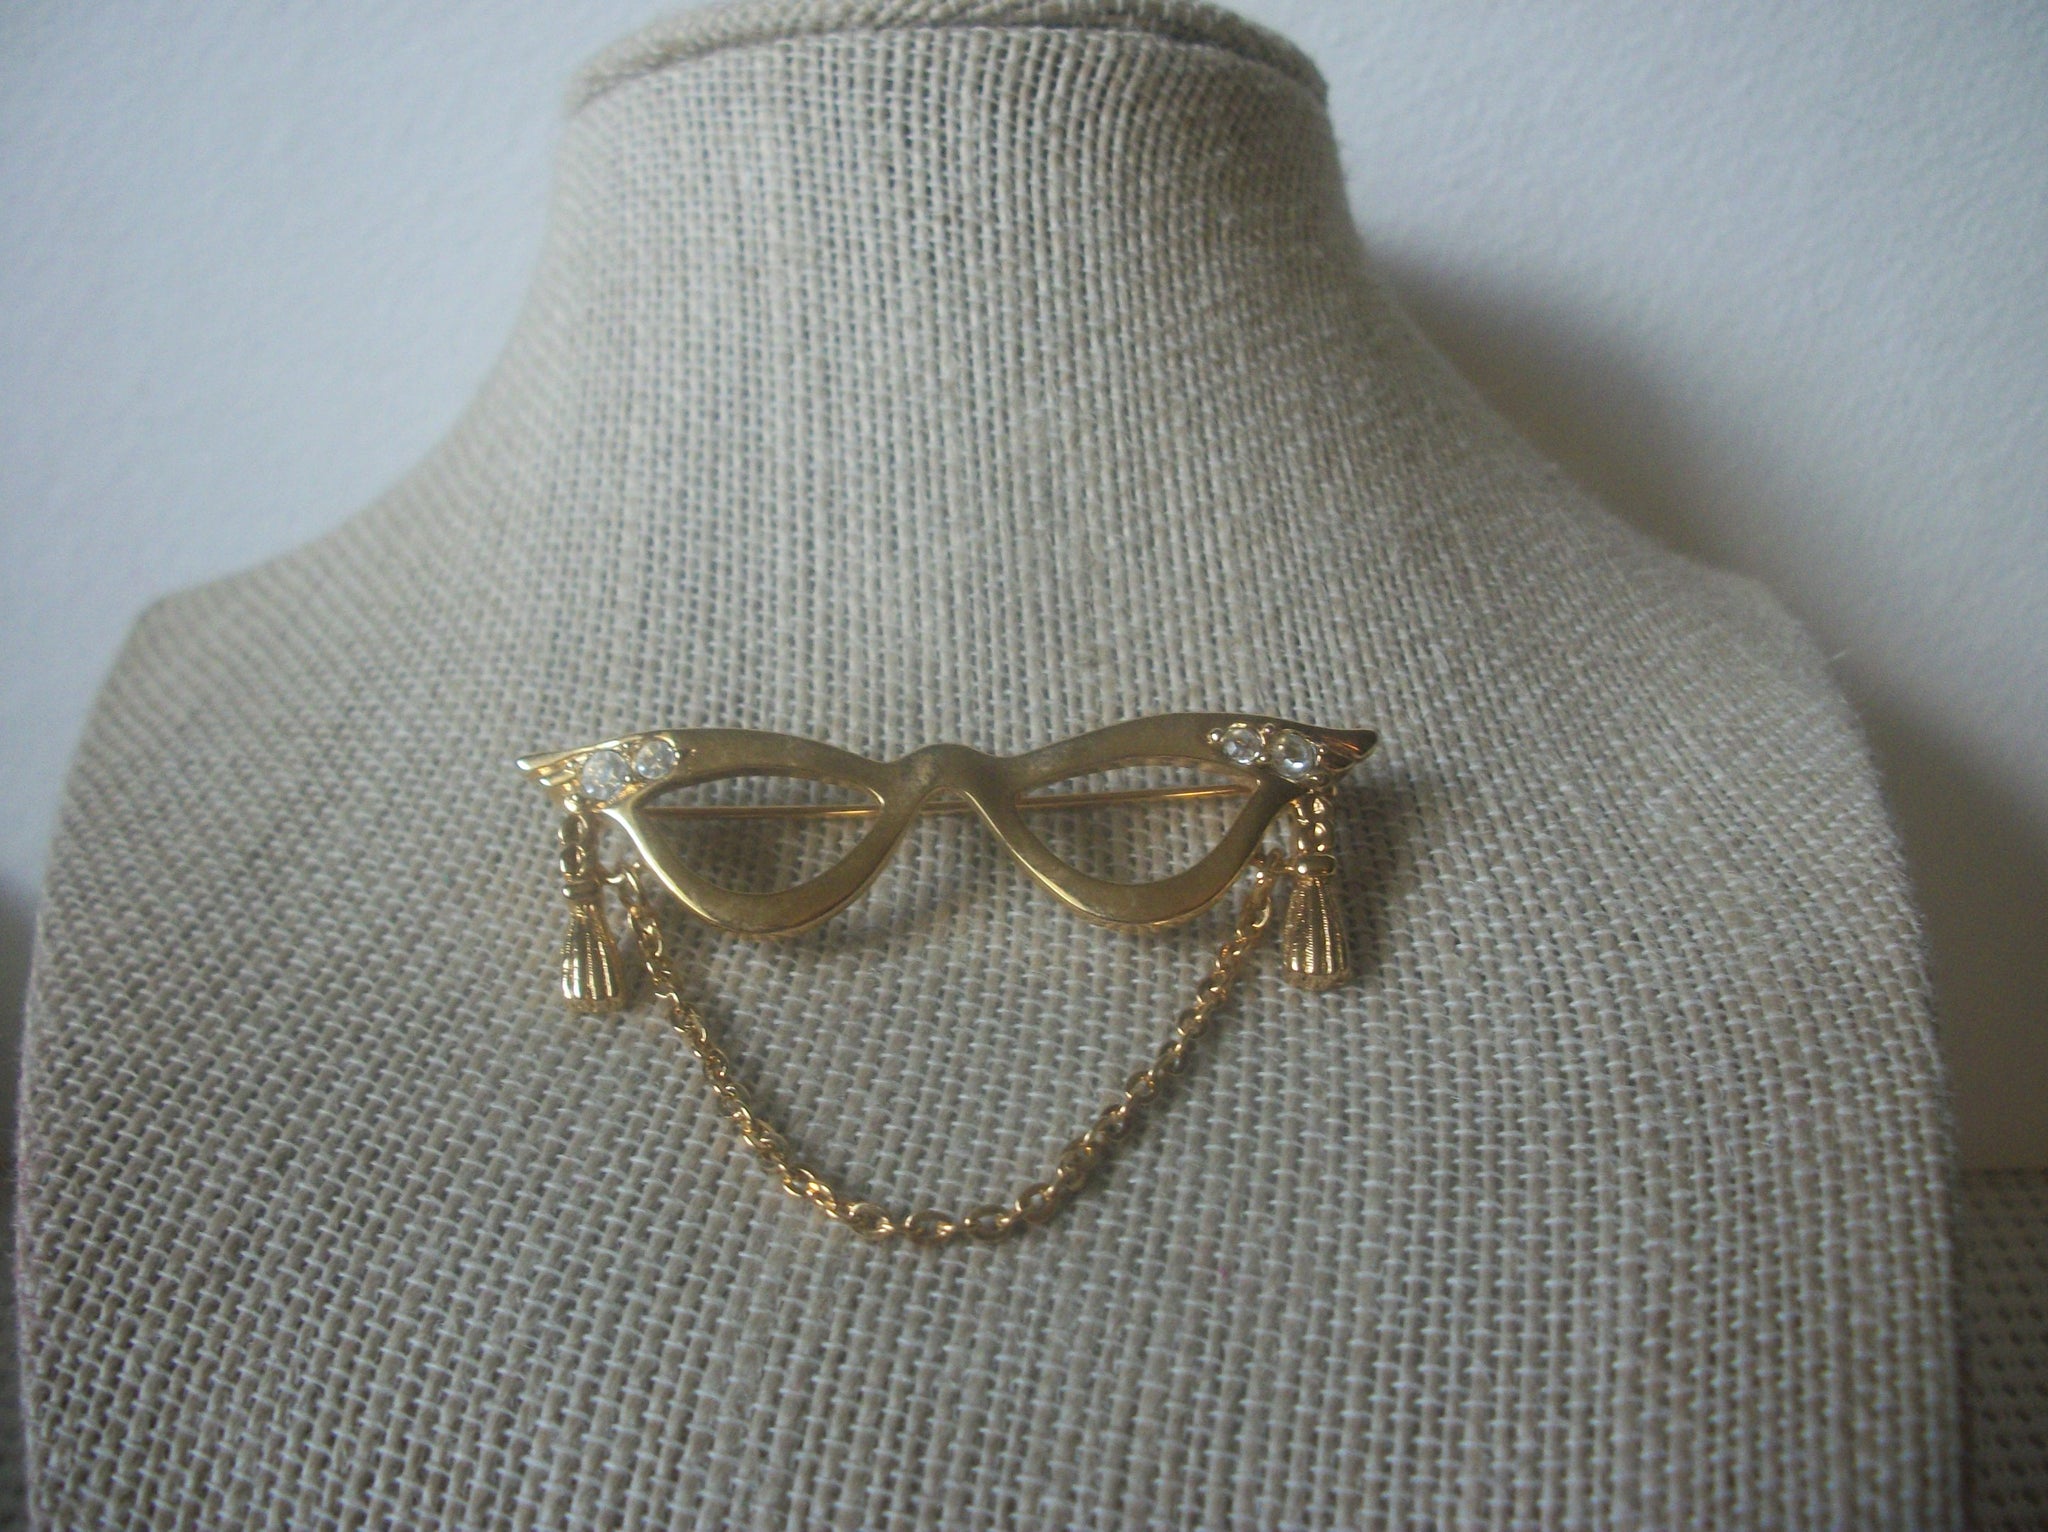 Vintage Brooch Pin, Cat Eye Glasses, Clear Rhinestones, Gold Tone, Chain Links, 72517